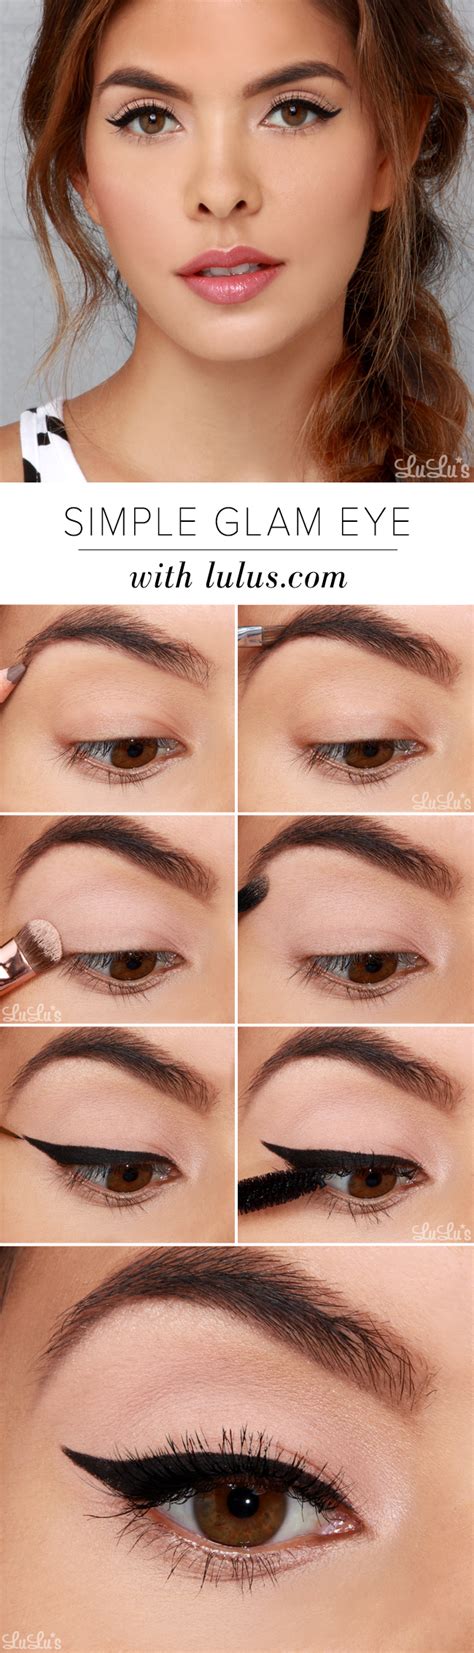 Lulus How To Simple Glam Eye Makeup Tutorial Lulus Com Fashion Blog